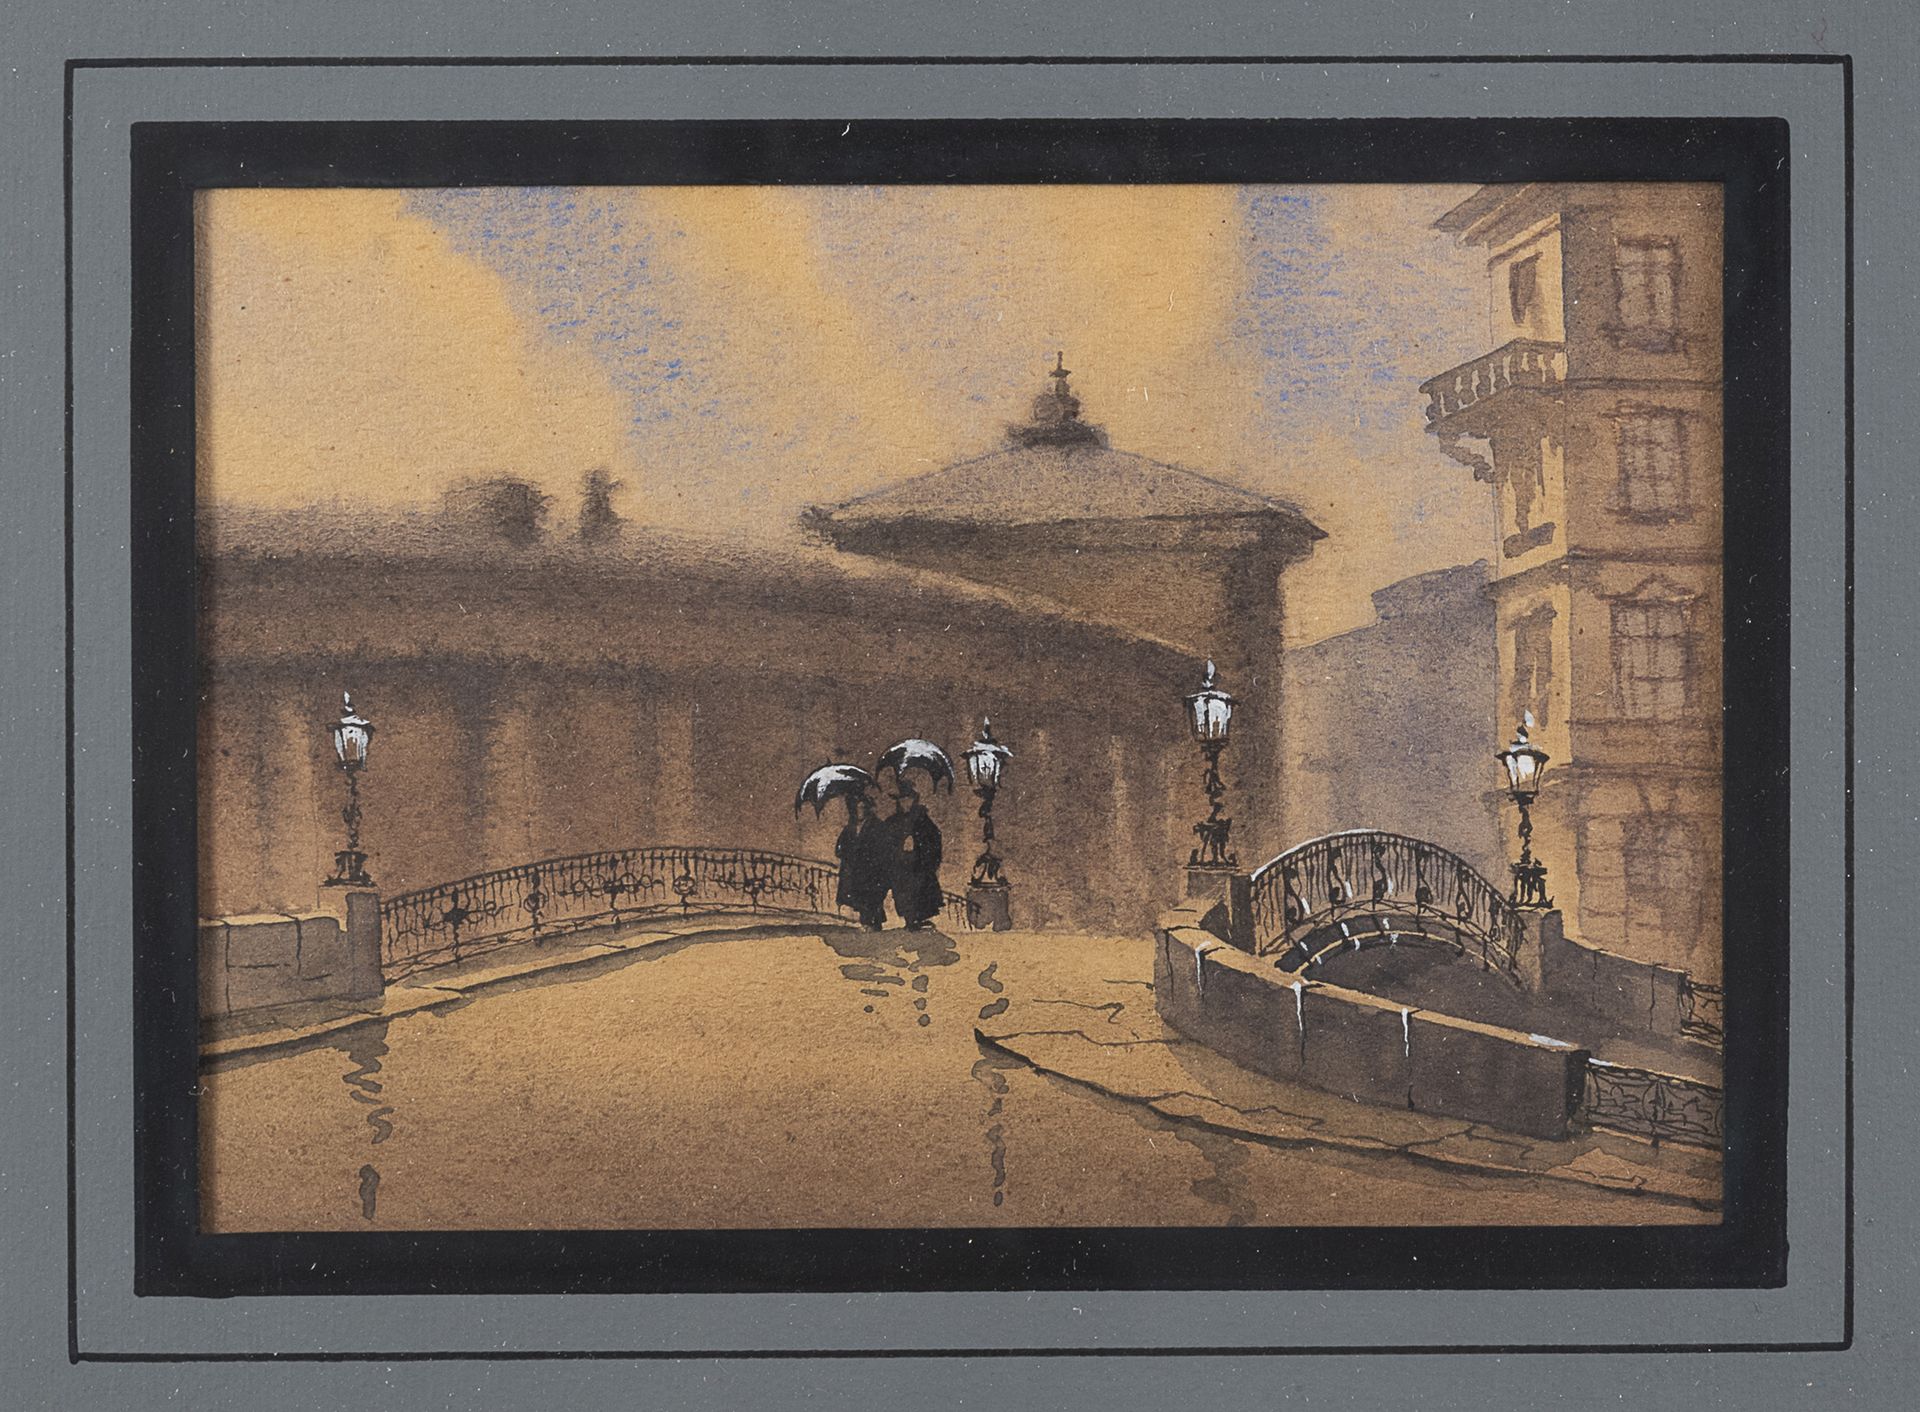 Null 那不勒斯画家，20世纪初



普莱比奇托广场（Piazza del Plebiscito

纸上水彩画，厘米，11 x 17

樱桃和乌木框架